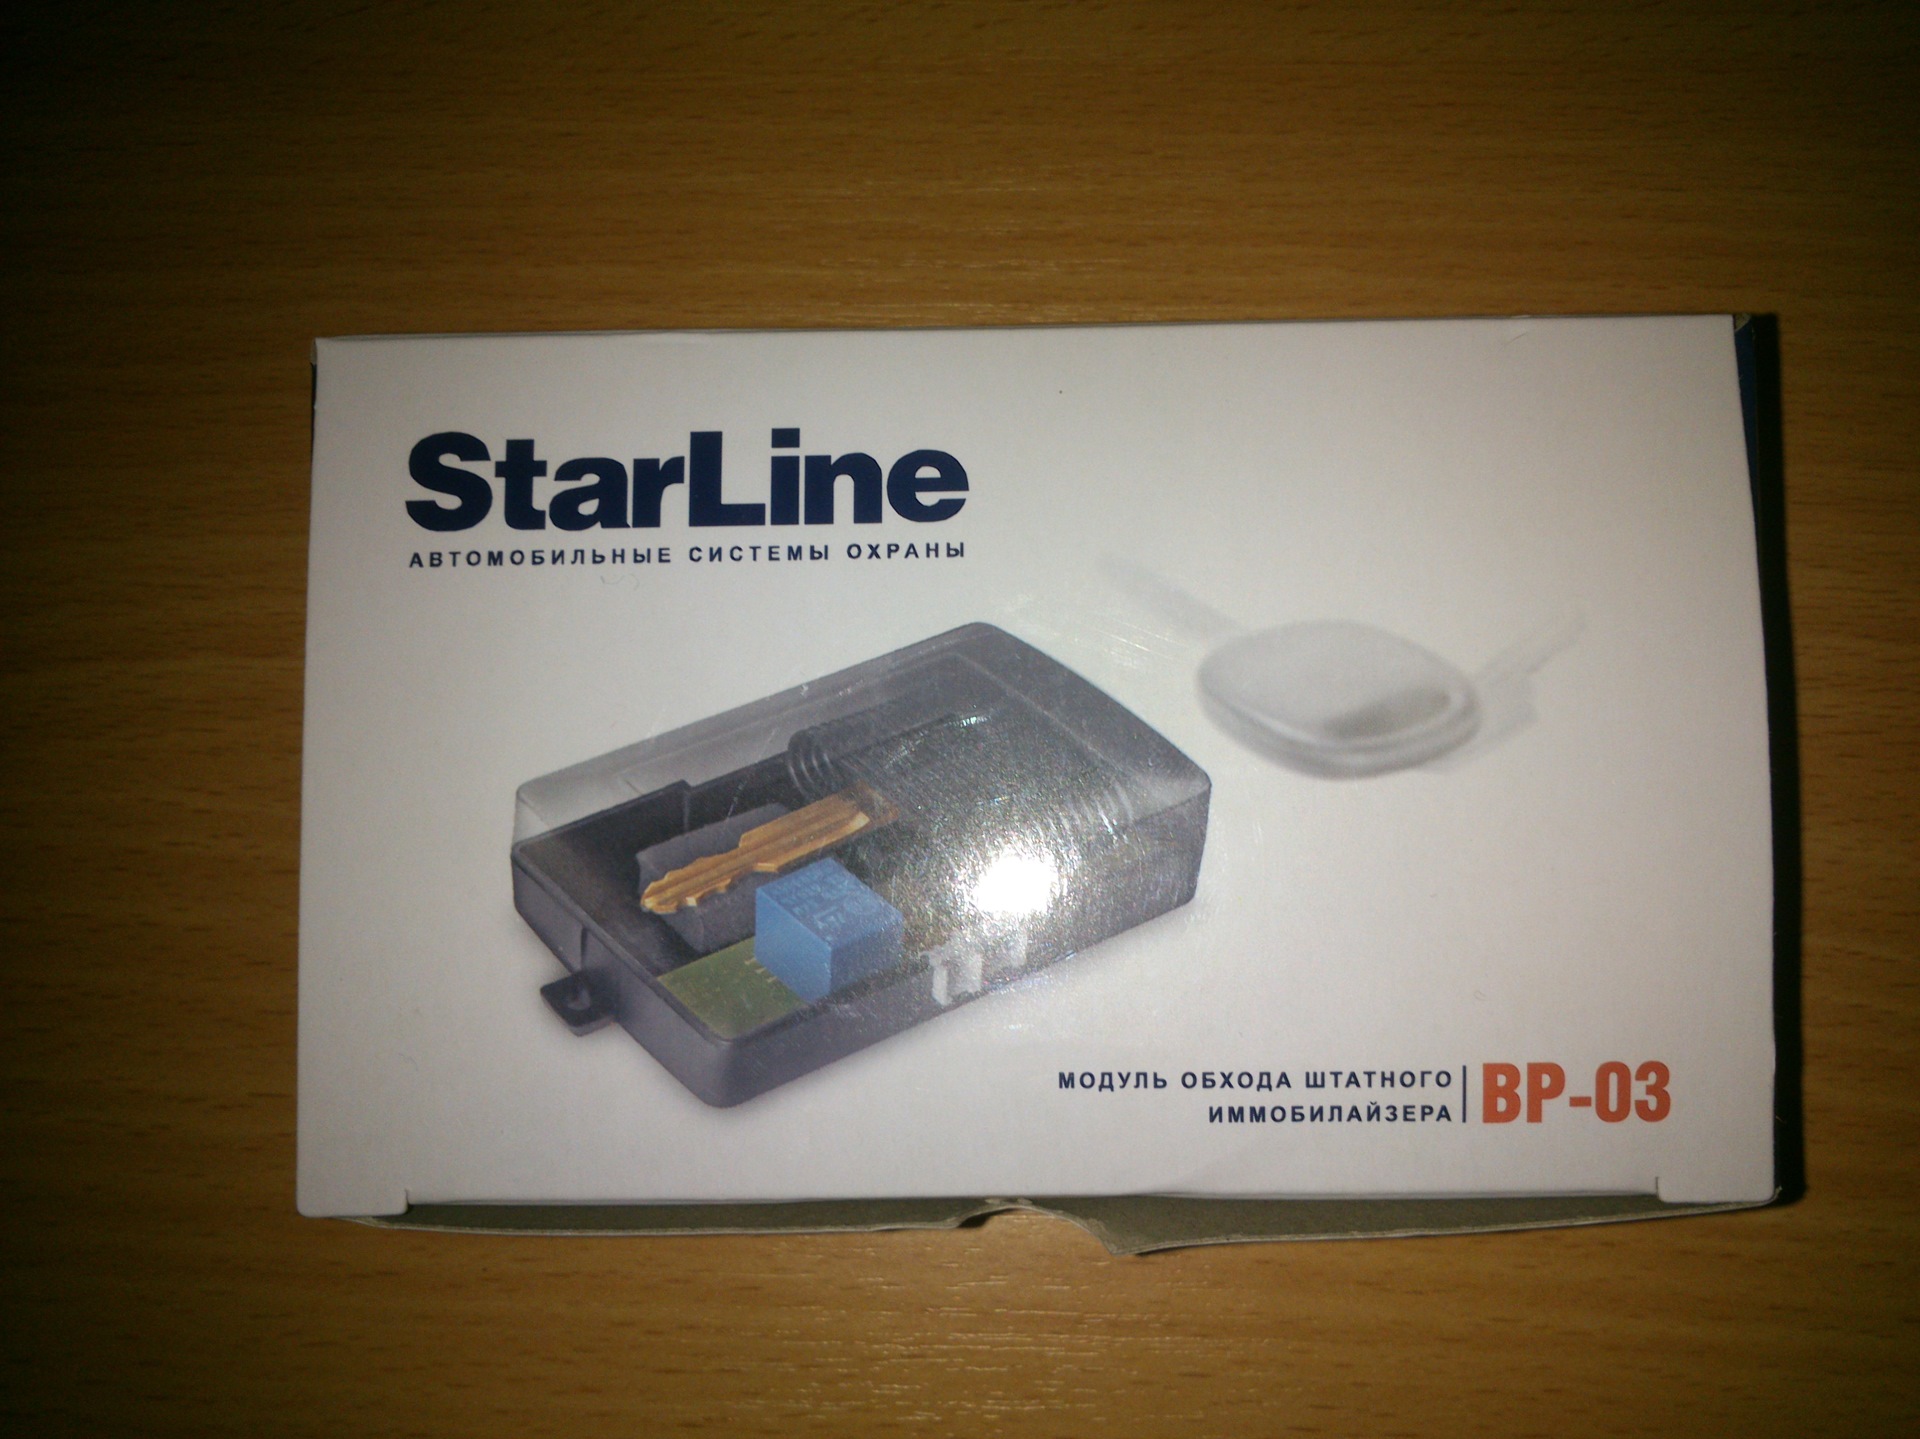 STARLINE BP-03. STARLINE вр3 (модуль обхода штатного иммобилайзера). STARLINE a3. Старлайн БП 03. Обход иммобилайзера старлайн